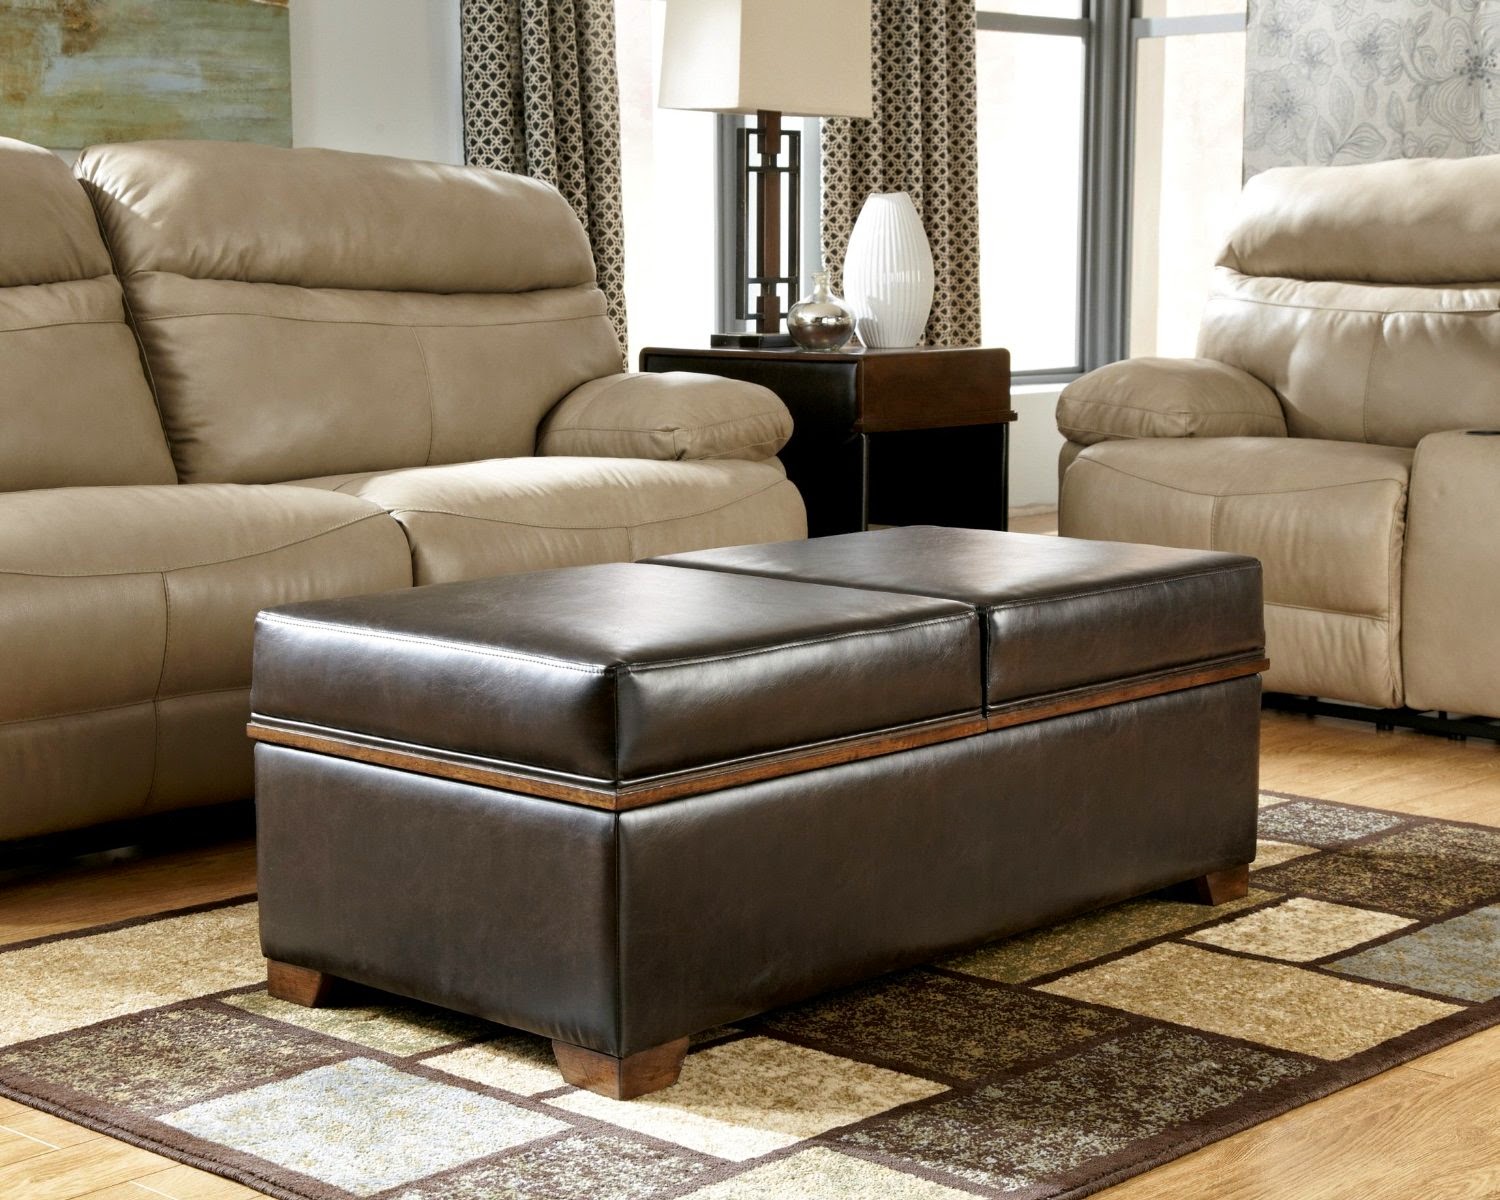 5 Consider Double Duty Furniture via simphome